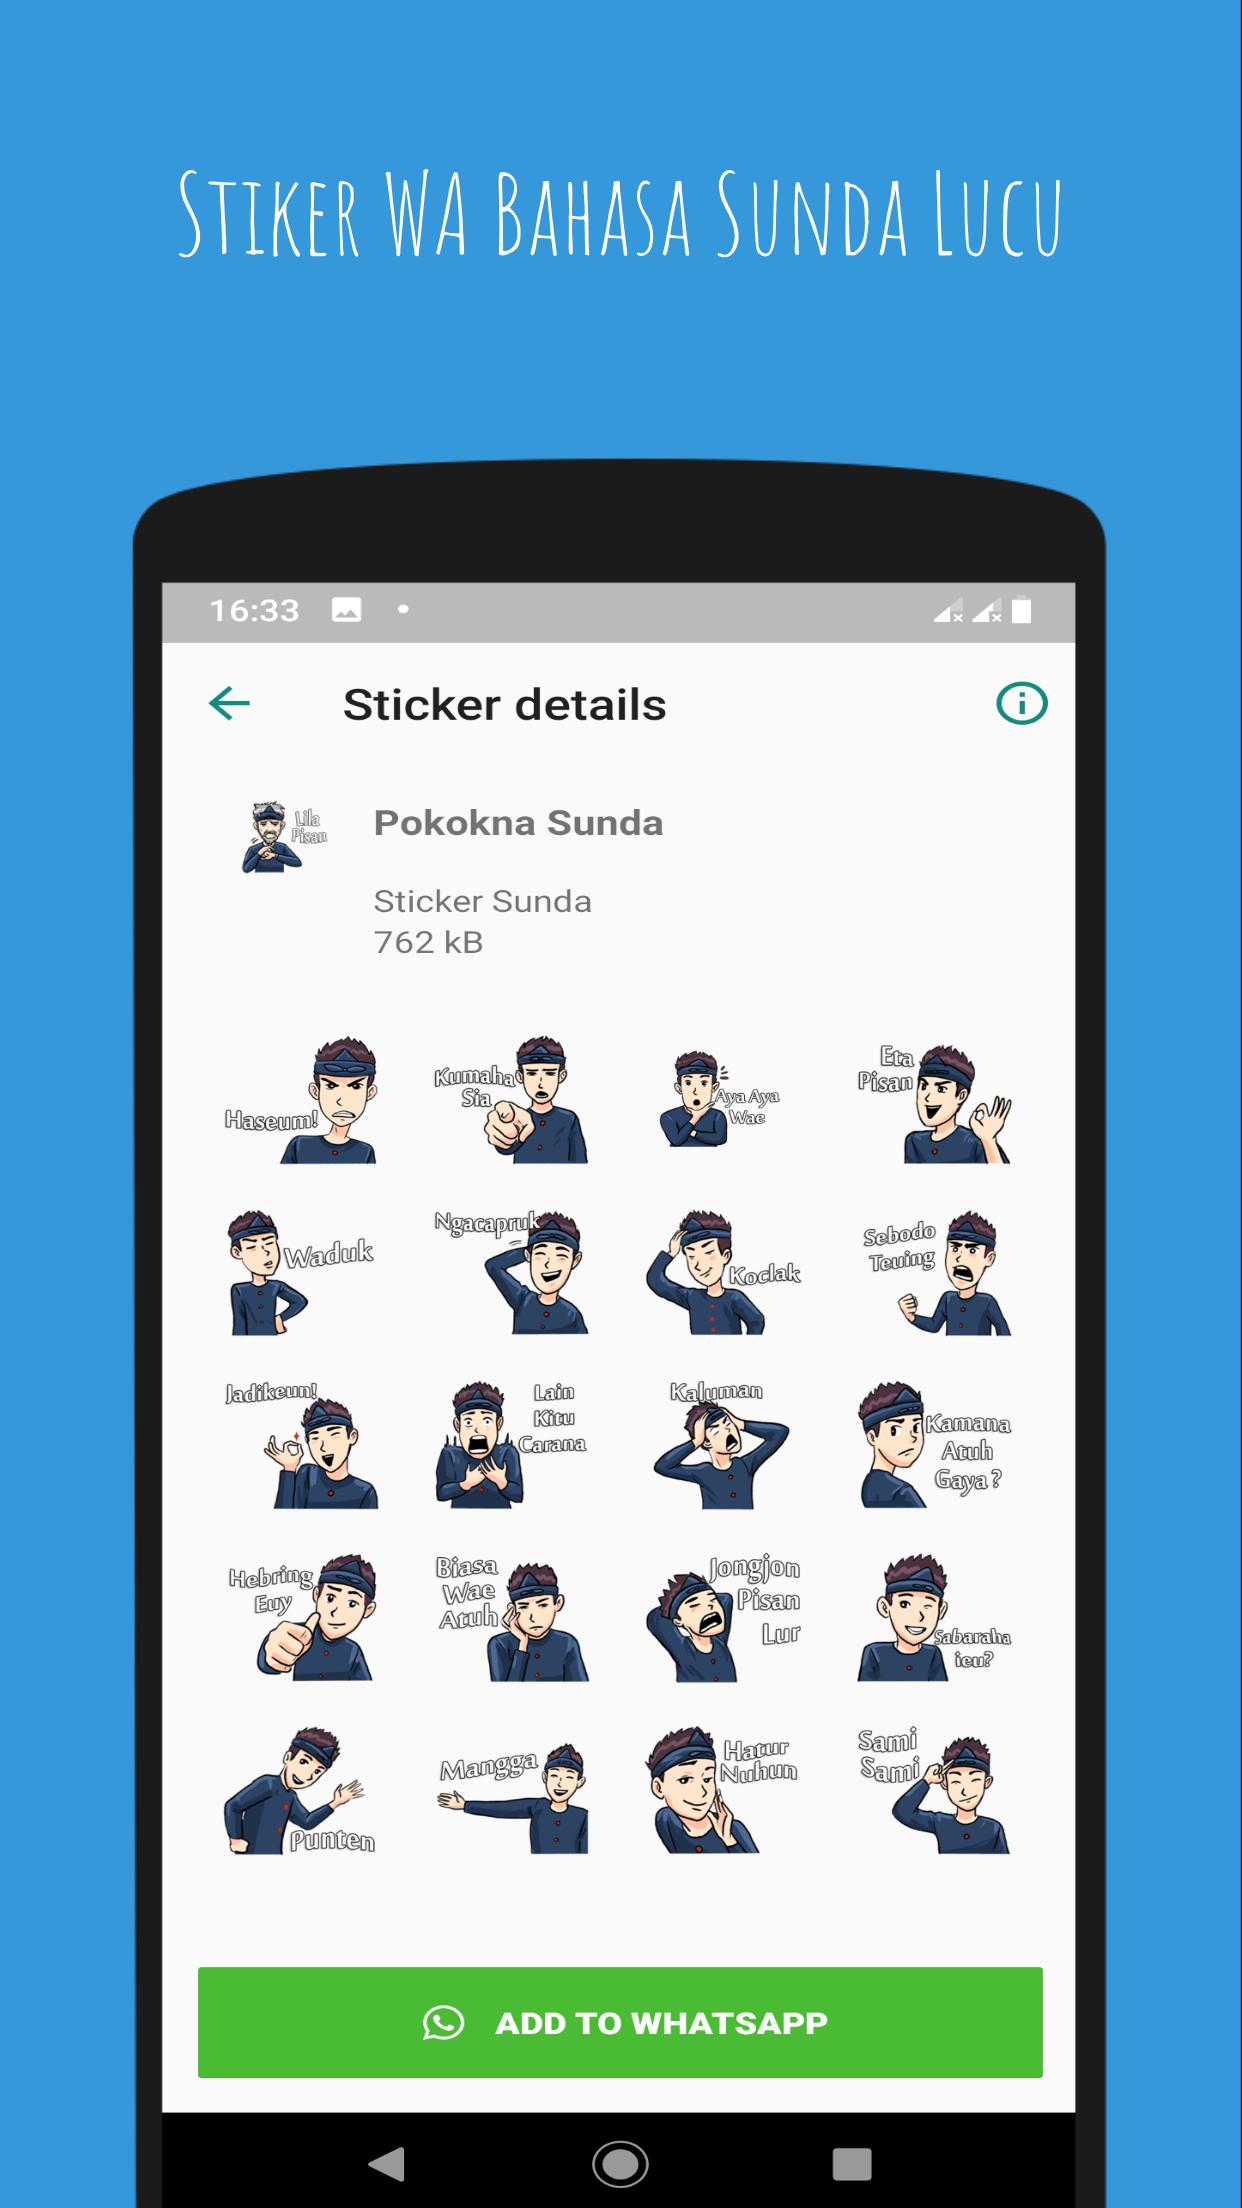 Stiker Wa Bahasa Sunda Lucu For Android Apk Download